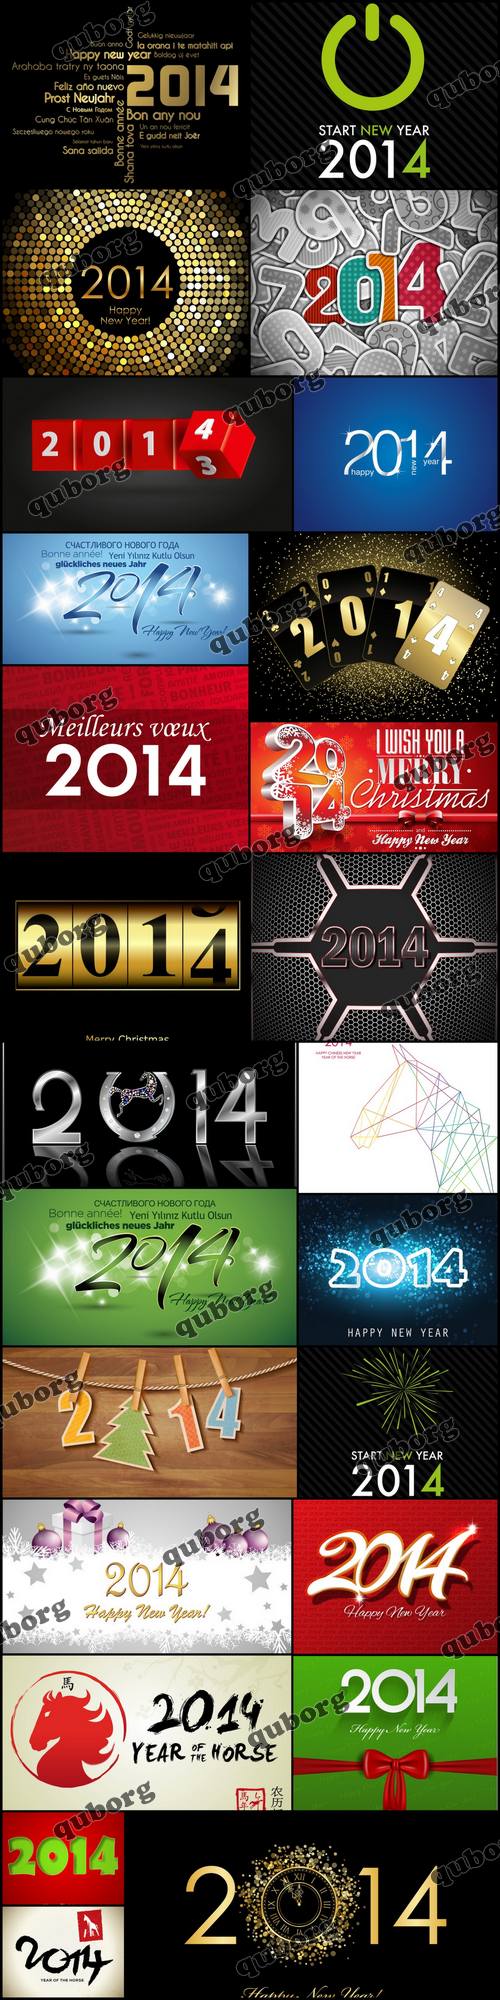 Stock Vector - New Year 2014 4